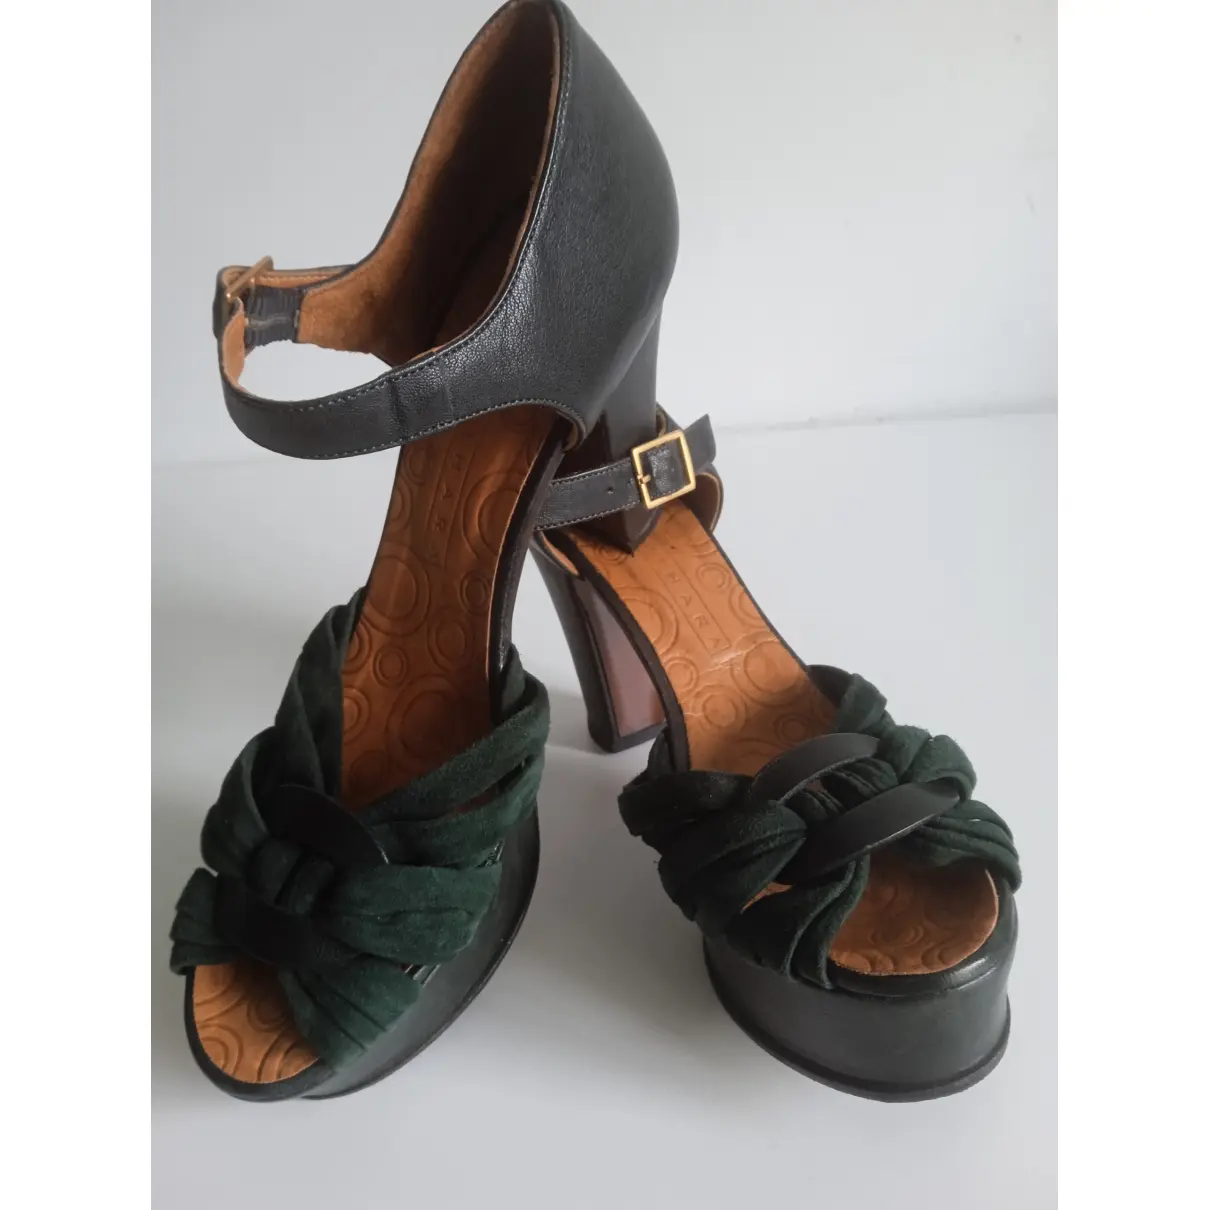 Buy Chie Mihara Sandals online